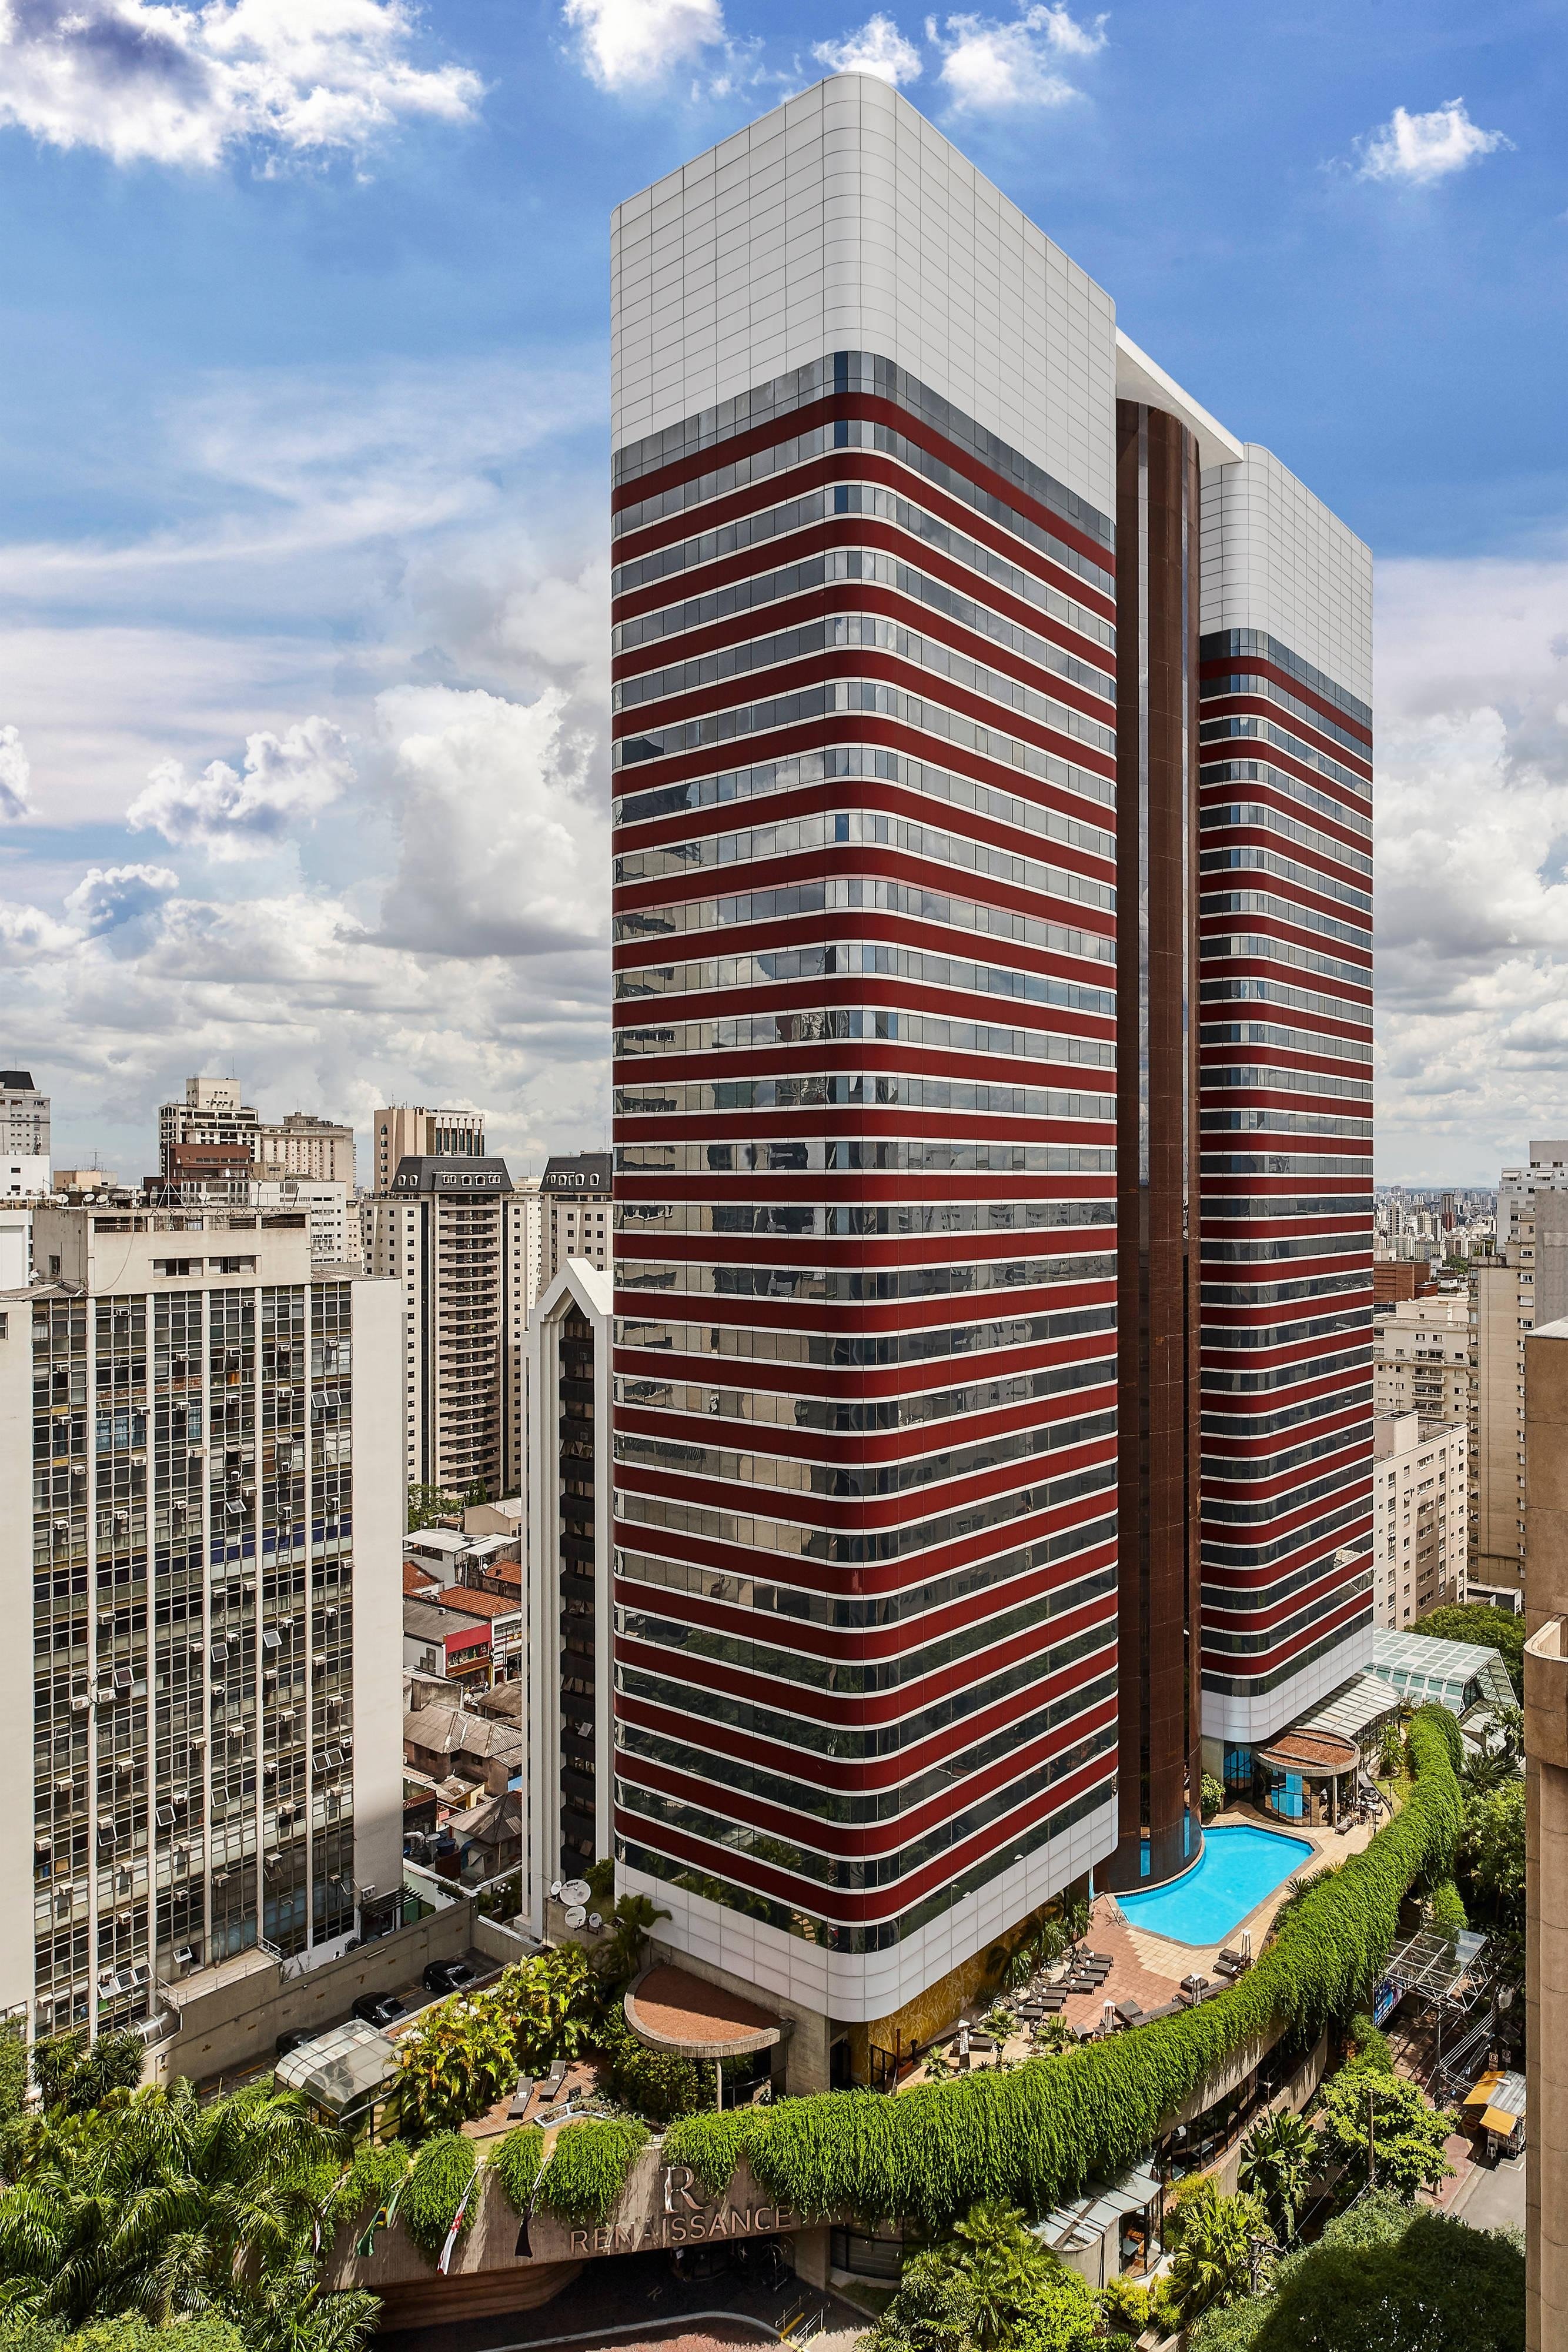 Renaissance Sao Paulo Hotel